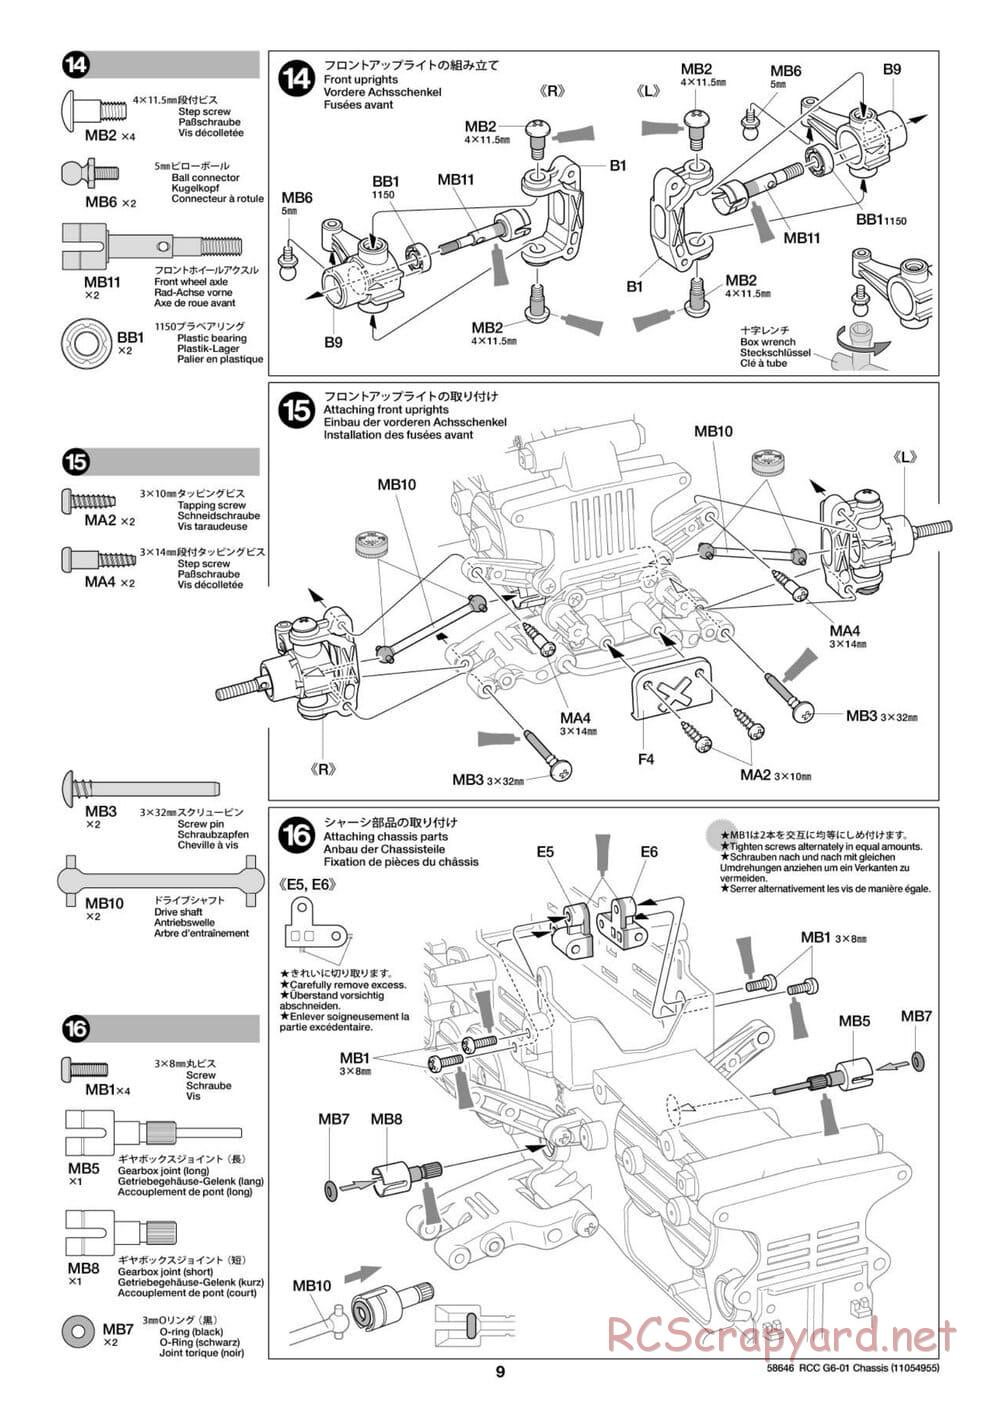 Tamiya - Konghead 6x6 - G6-01 Chassis - Manual - Page 9